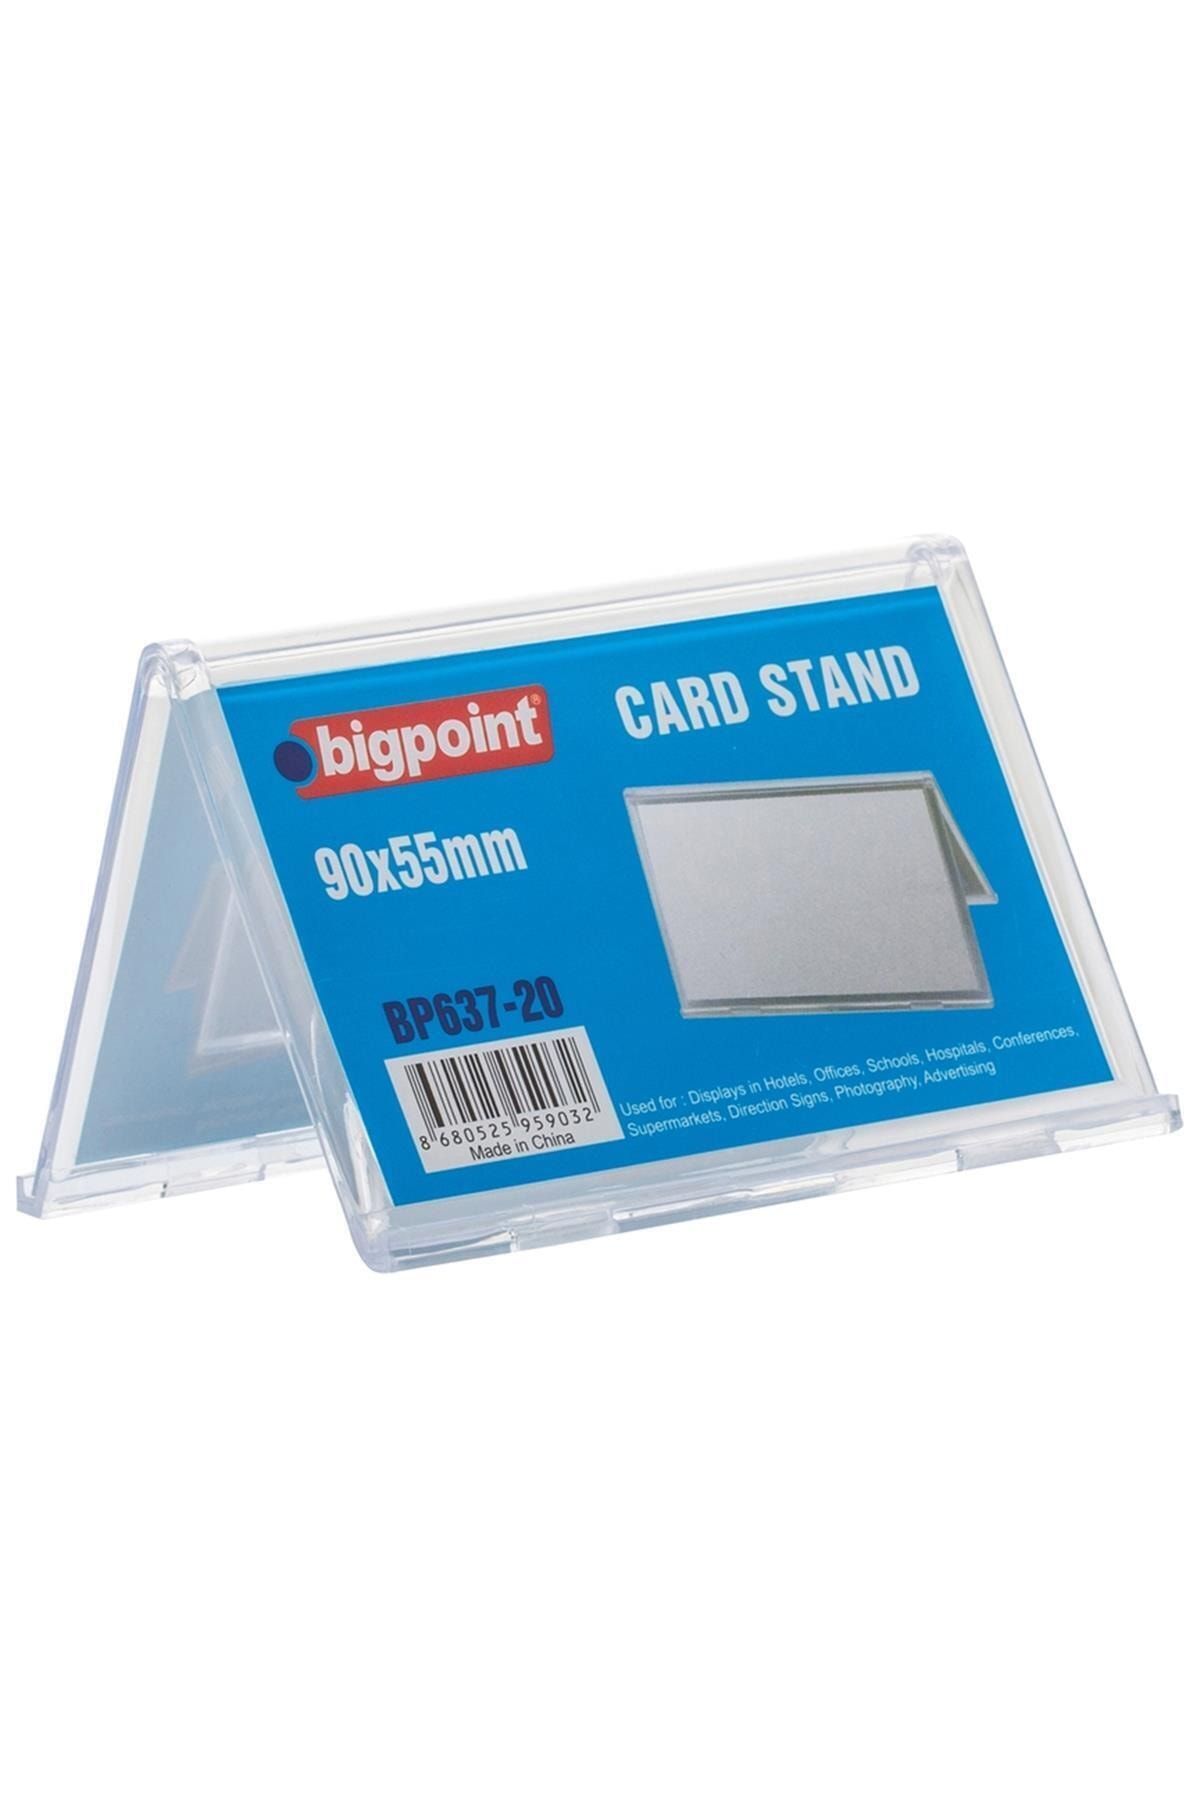 Bigpoint Beyaz Çift Taraflı Kart Standı 90x55mm